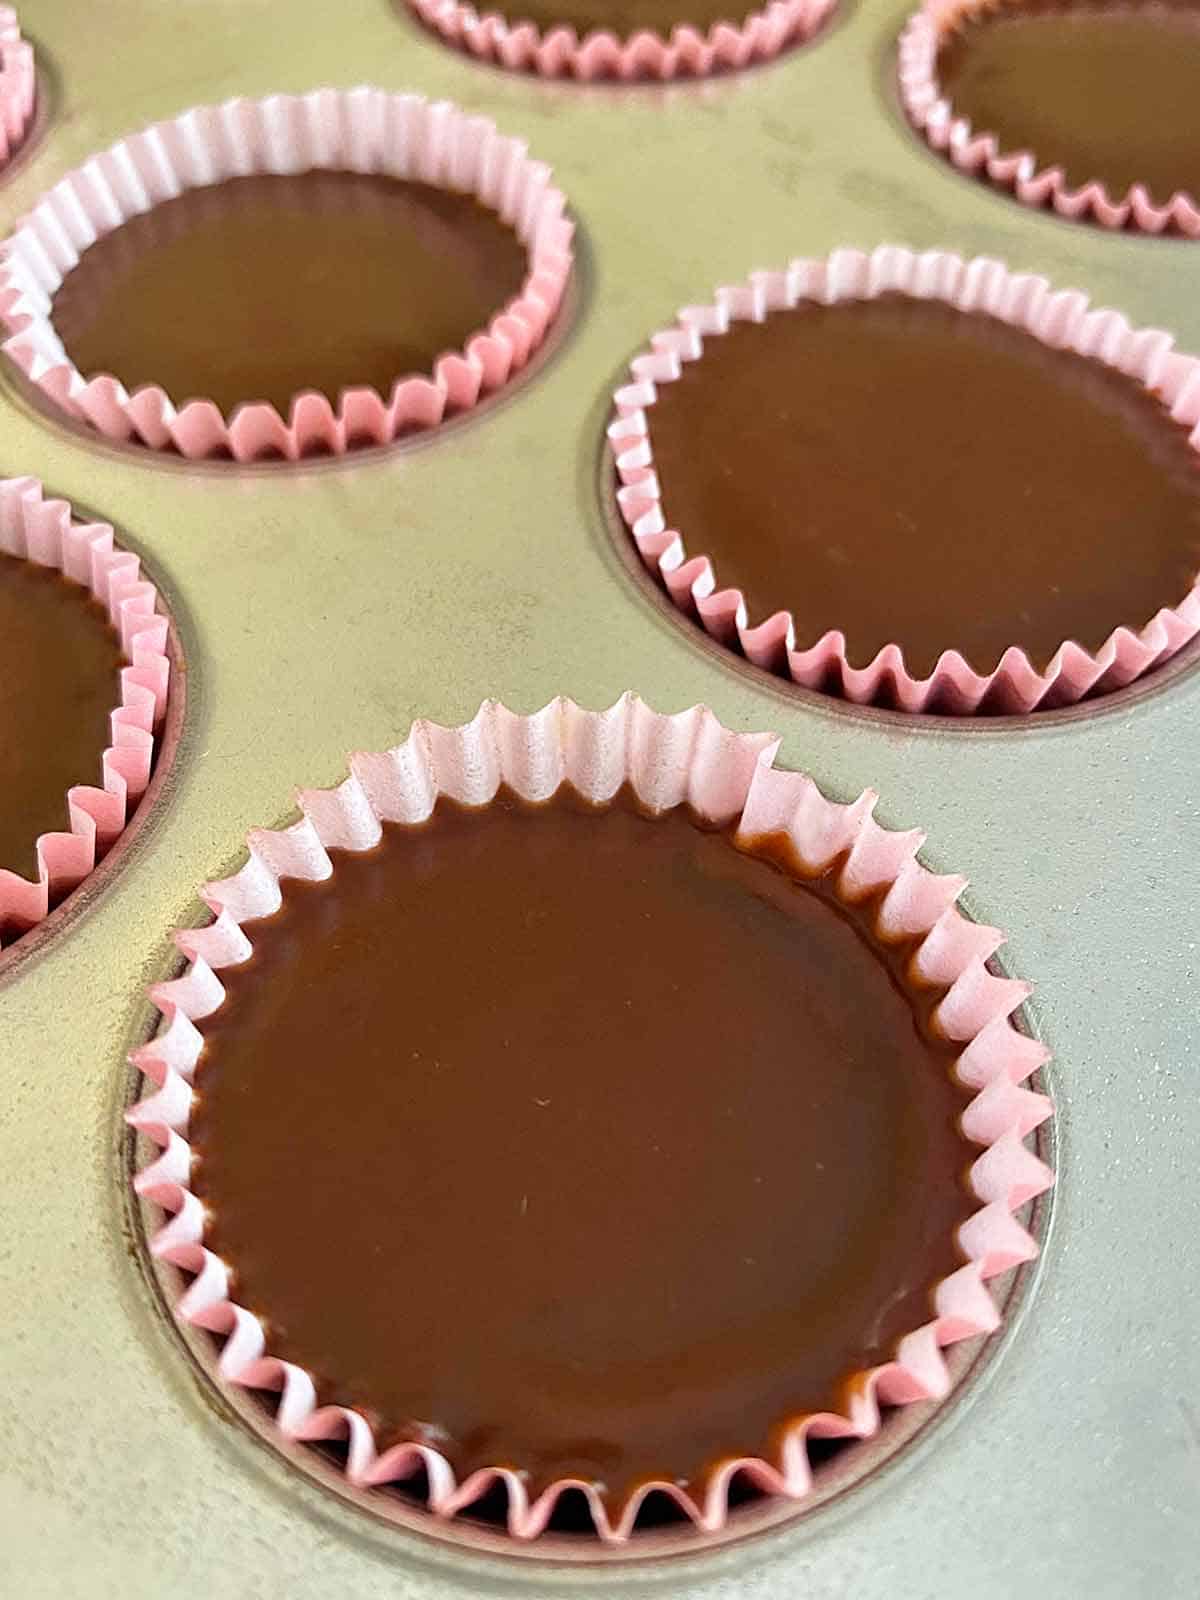 Finished flourless mini chocolate cakes topped with ganache glaze.